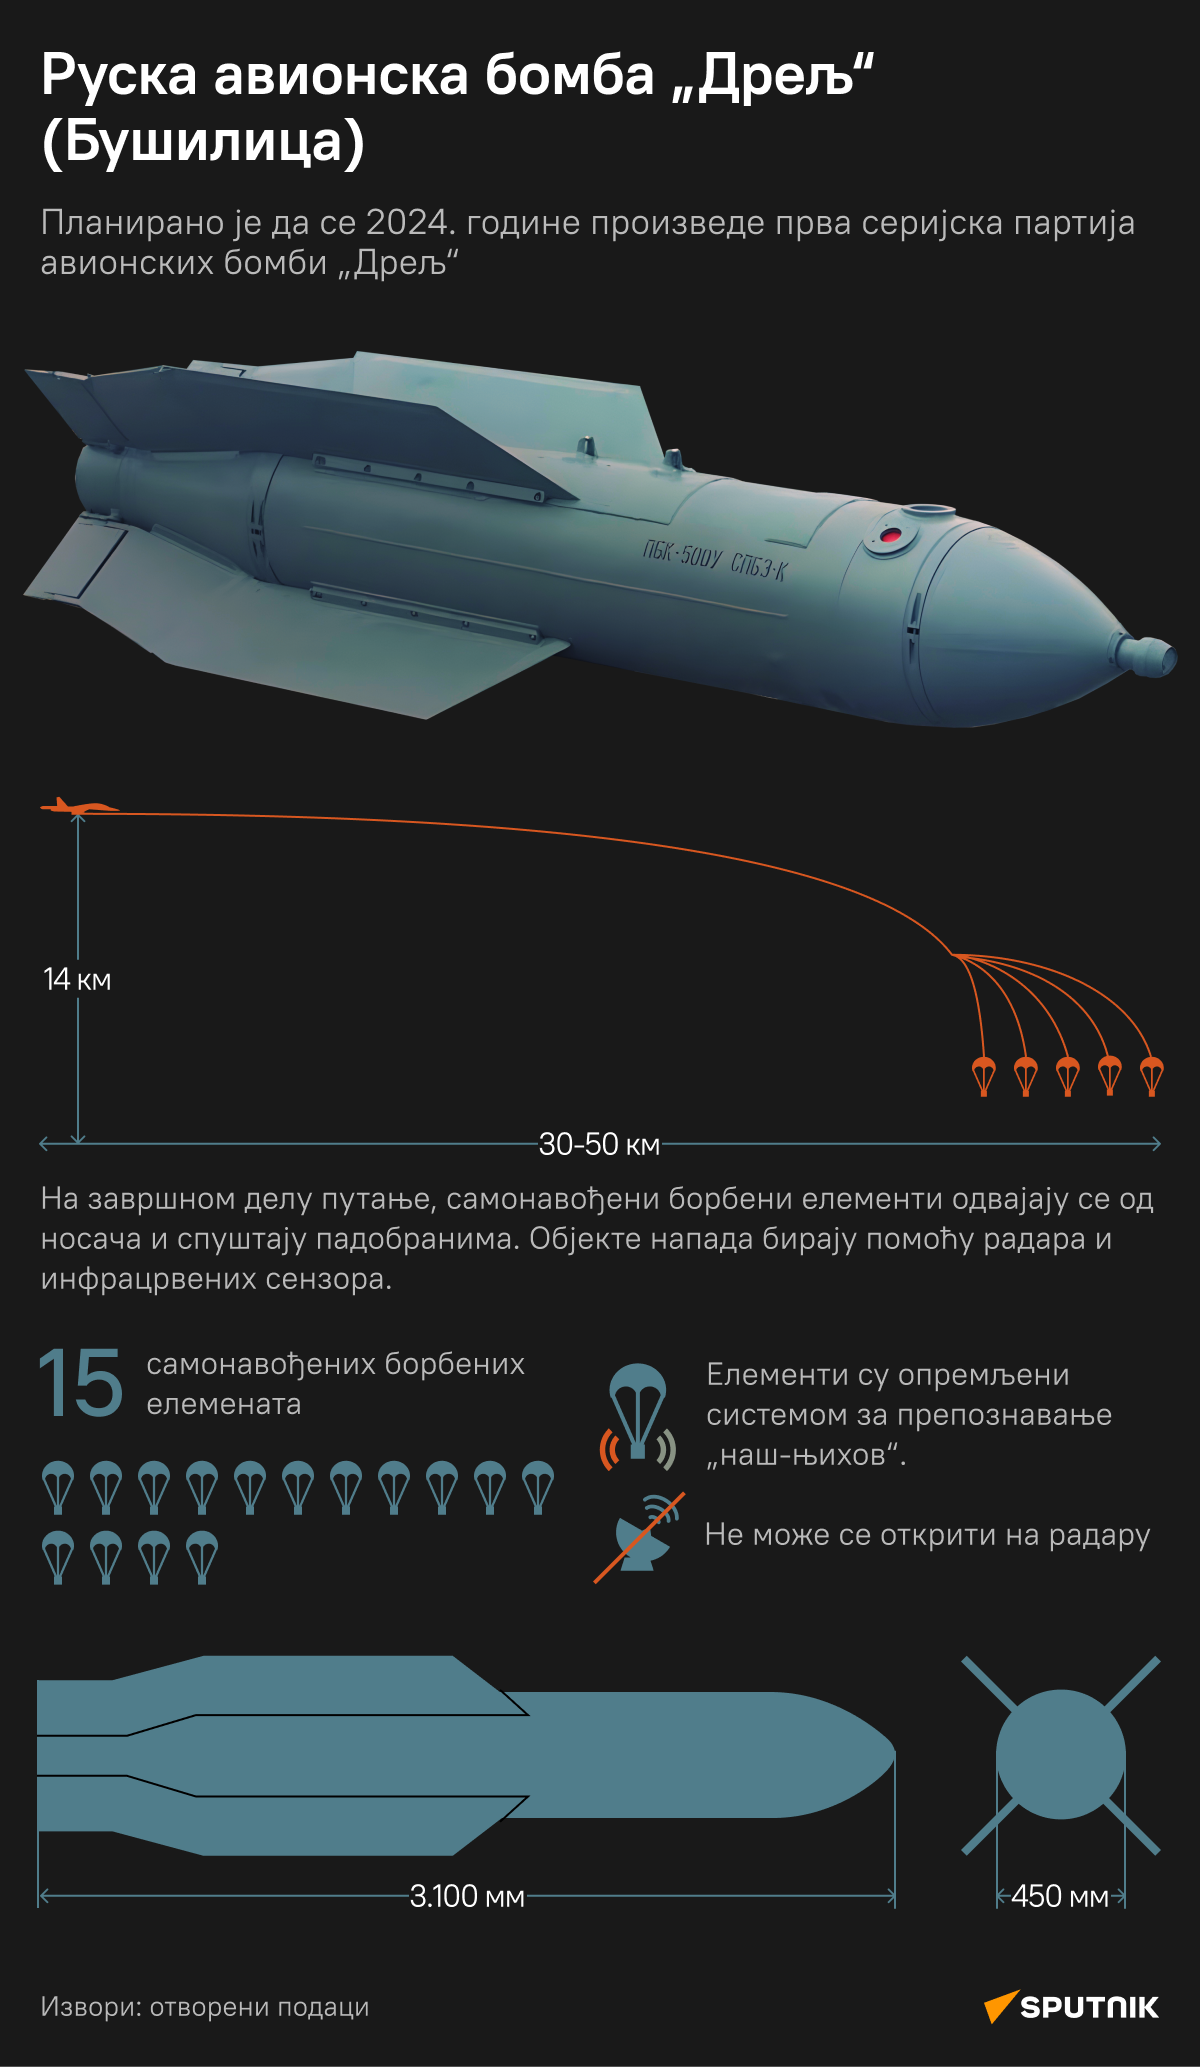 инфографика бомба бушилица  ЋИР деск - Sputnik Србија